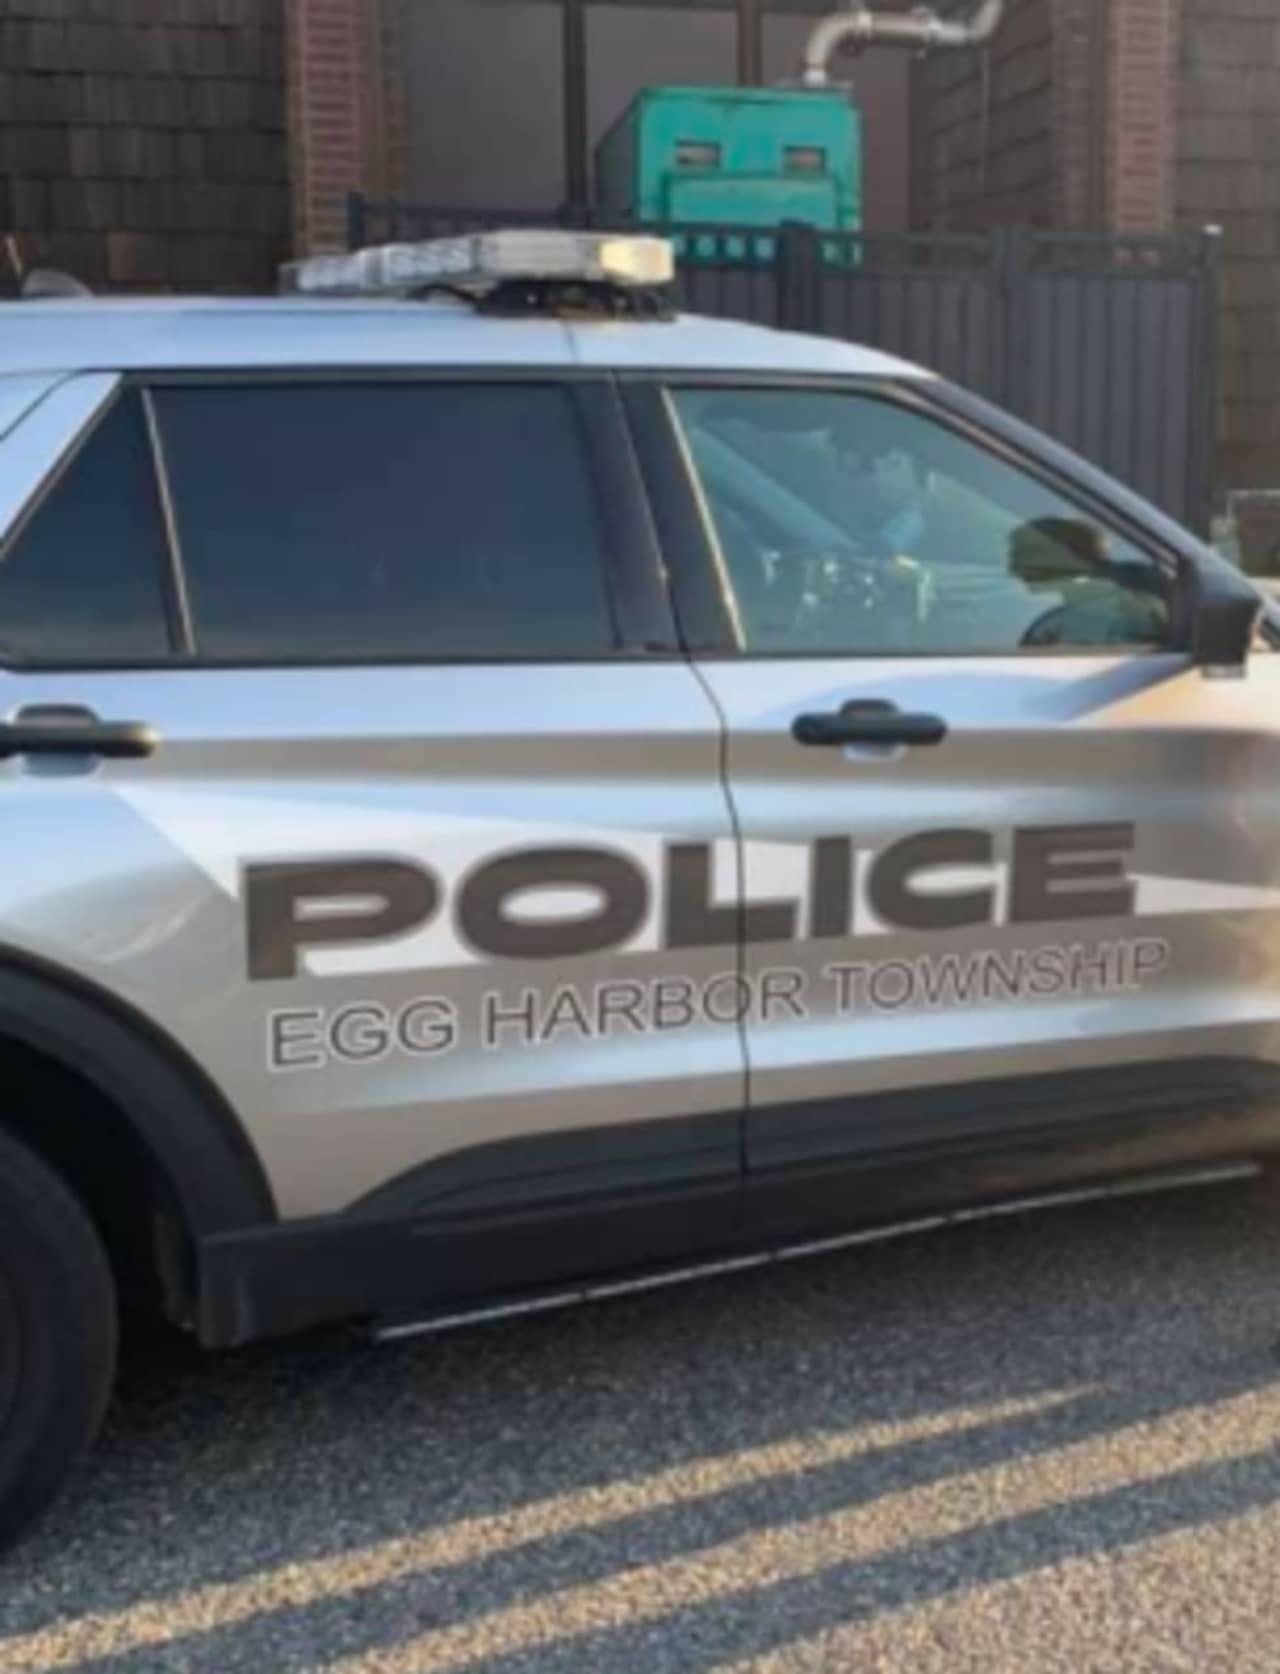 Egg Harbor township Police